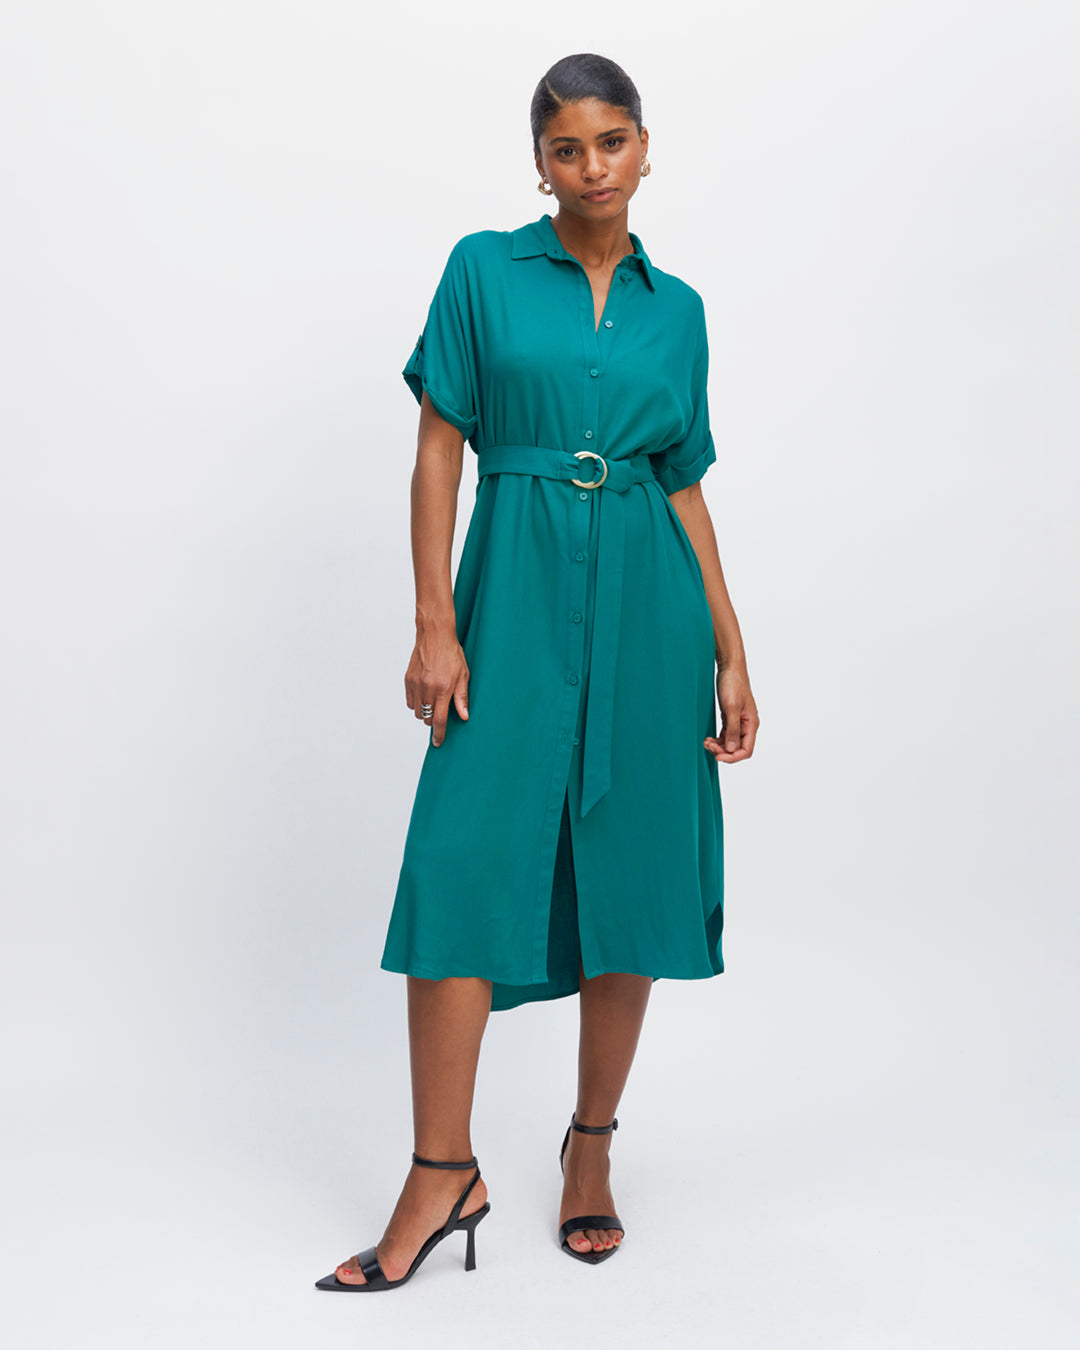 Dress-long-green-Collar-blouse-Cut-right-Length-under-the-knee-Belt-ton-on-ton-17H10-tailors-for-women-paris-